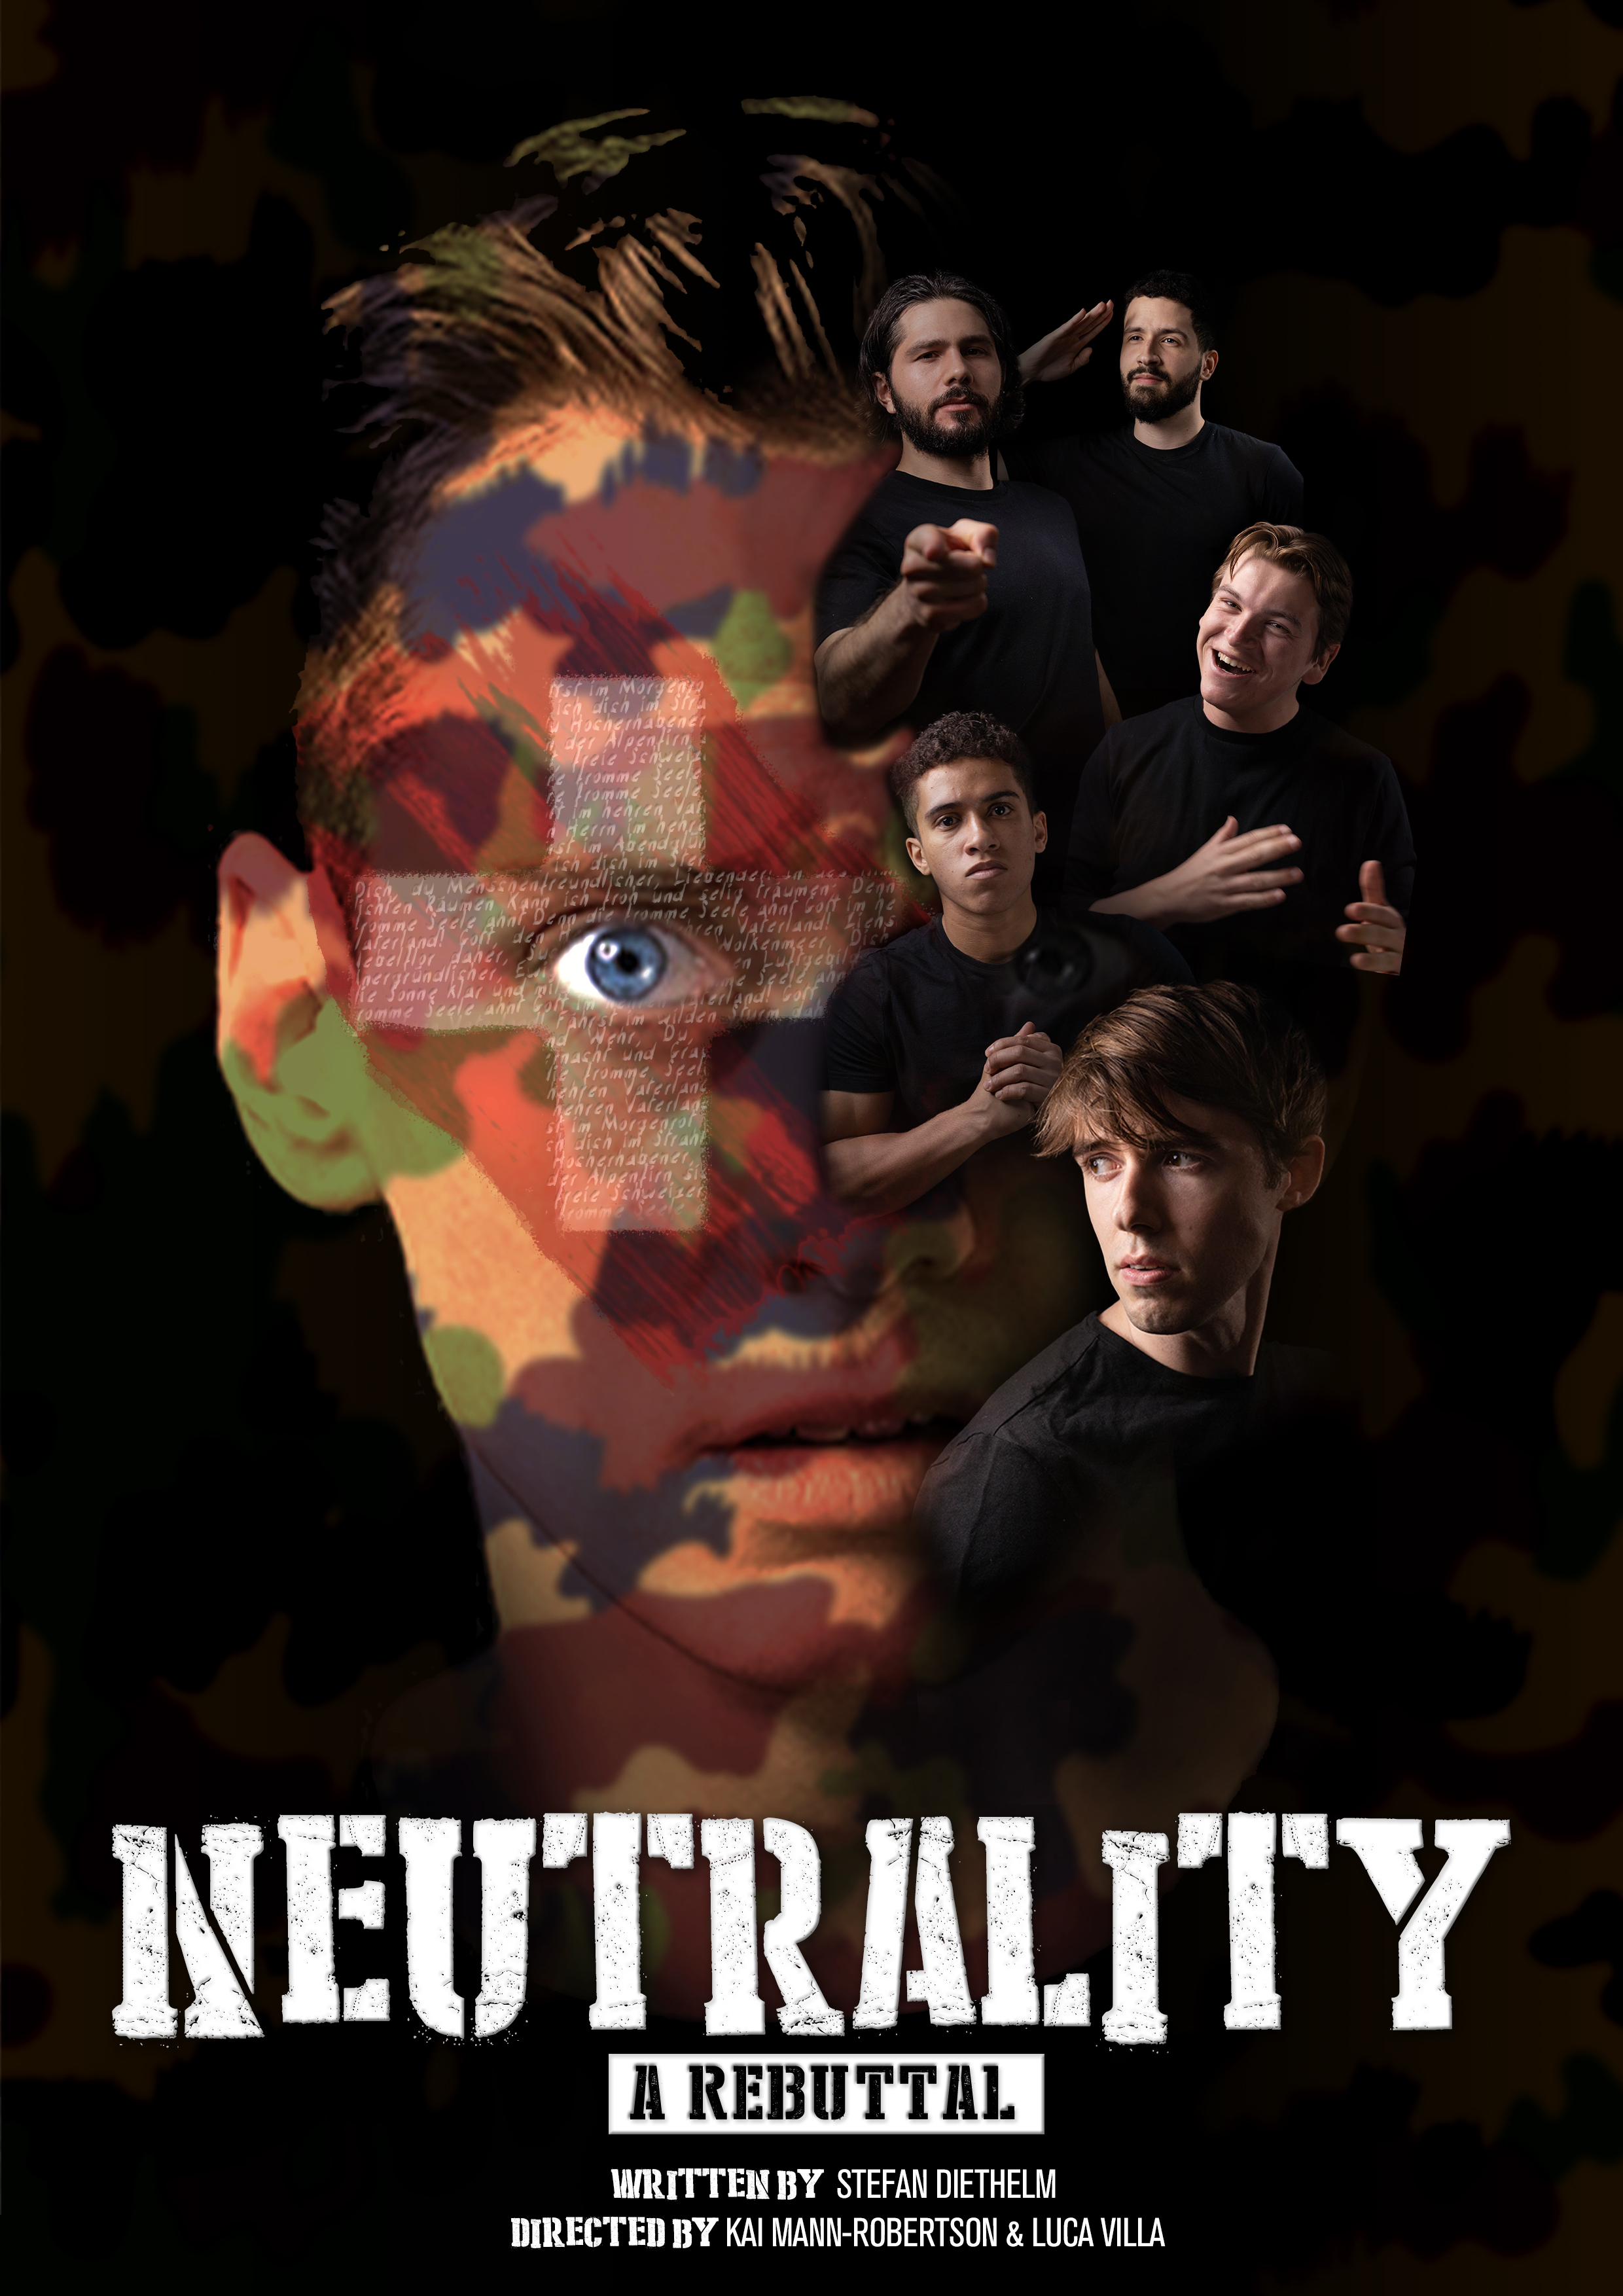 Poster for “Neutrality - A Rebuttal”
Photography by Santiago Leon
Poster Design by Kai Mann-Robertson